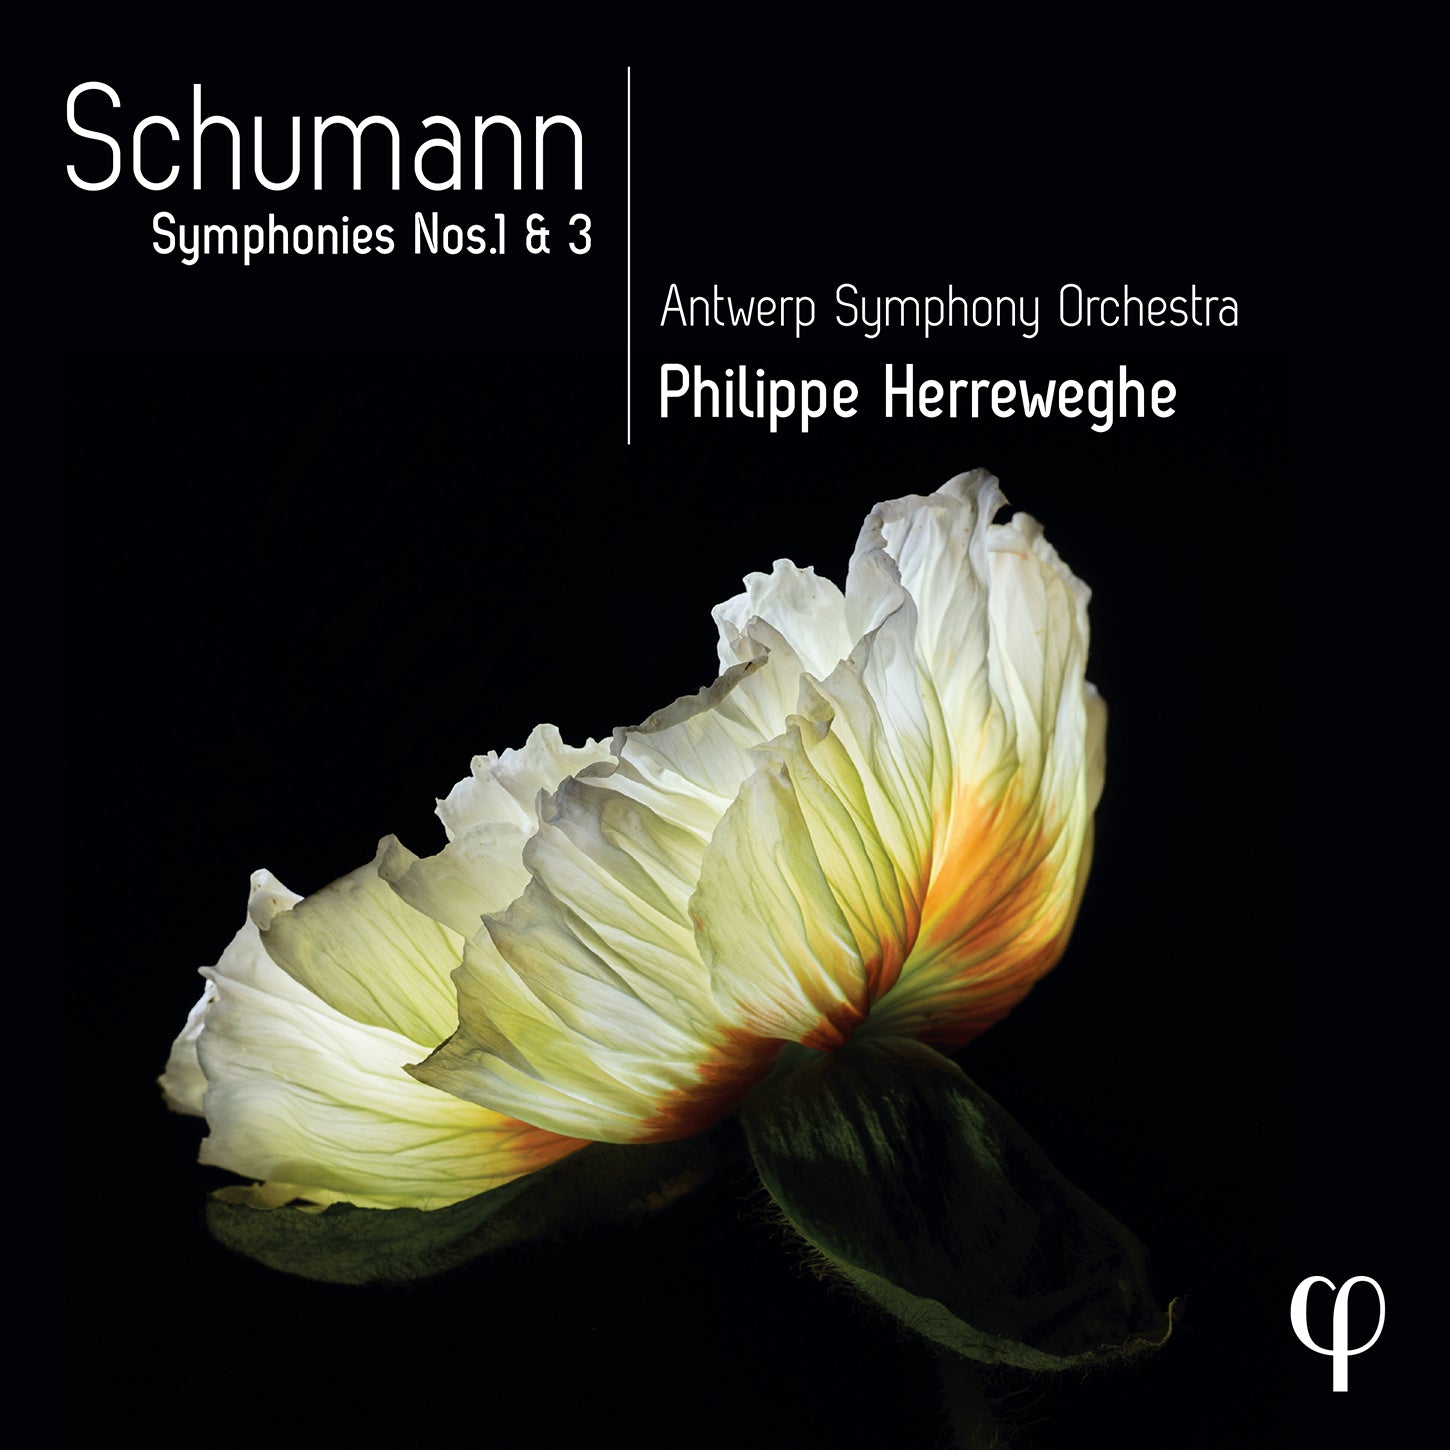 Schumann: Symphonies Nos. 1 & 3 / Antwerp Symphony Orchestra